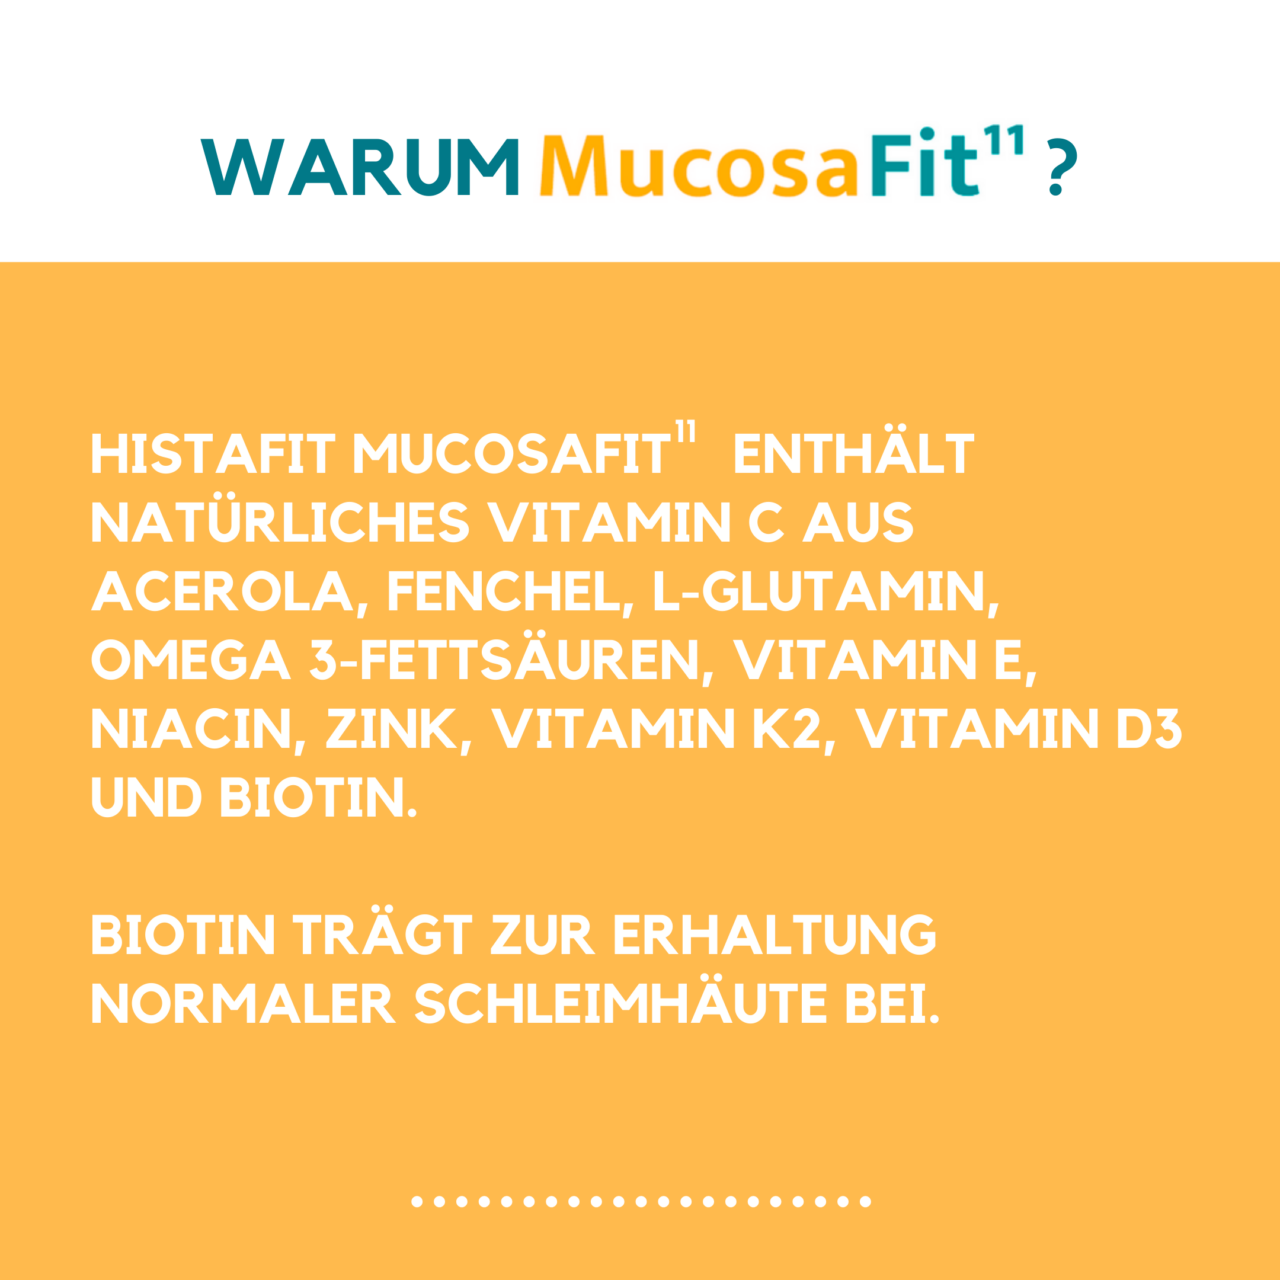 HistaFit MucosaFit11